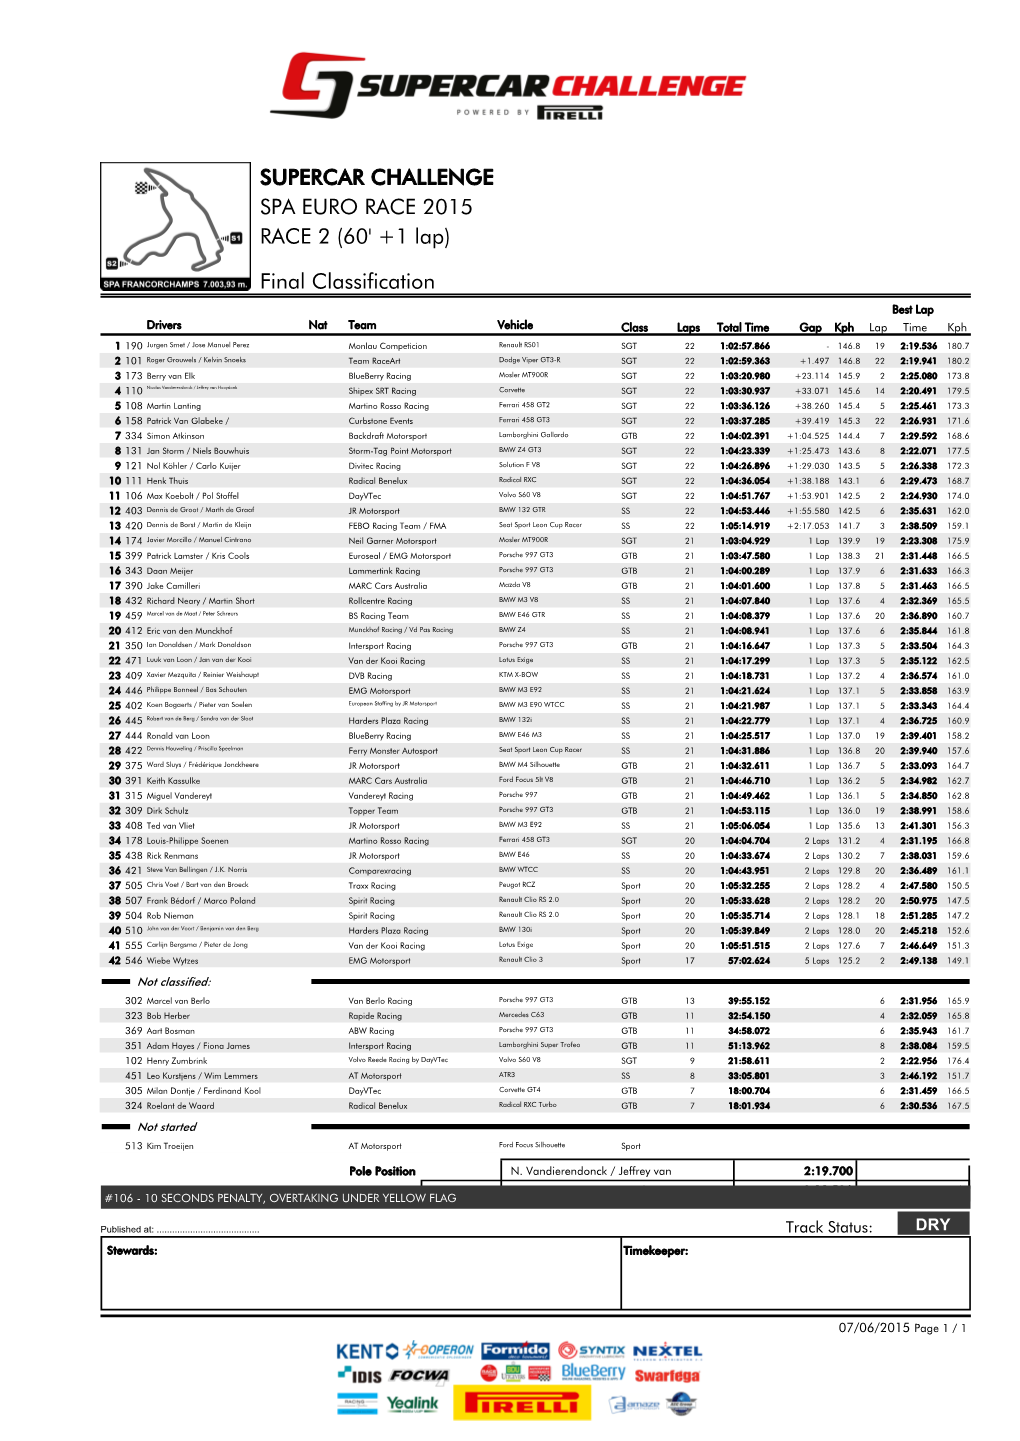 Final Classification SPA EURO RACE 2015 SUPERCAR CHALLENGE